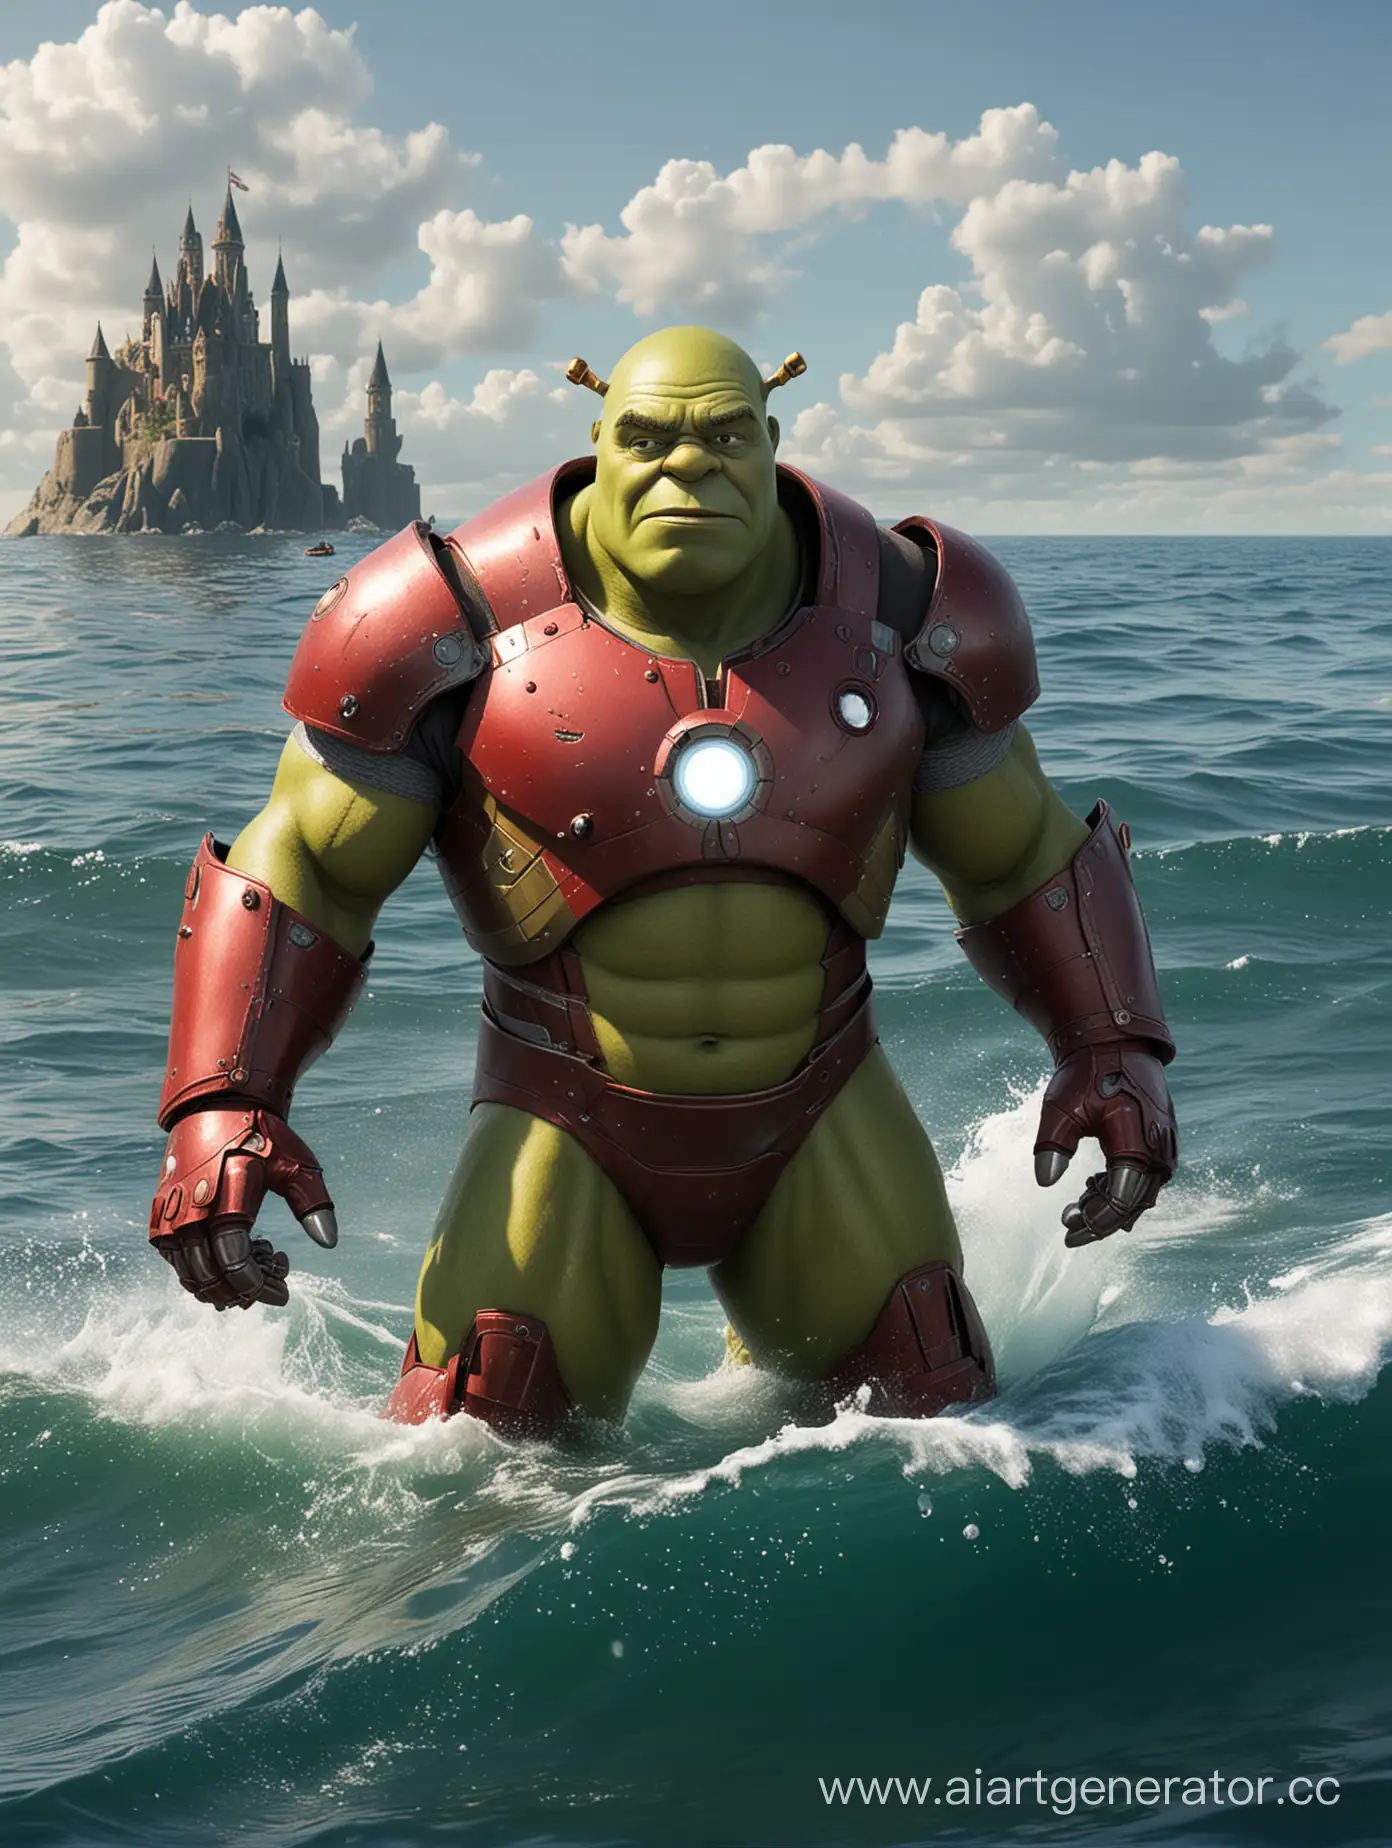 Shrek-Dressed-as-Iron-Man-Contemplating-Scandinavian-Mythology-at-Sea